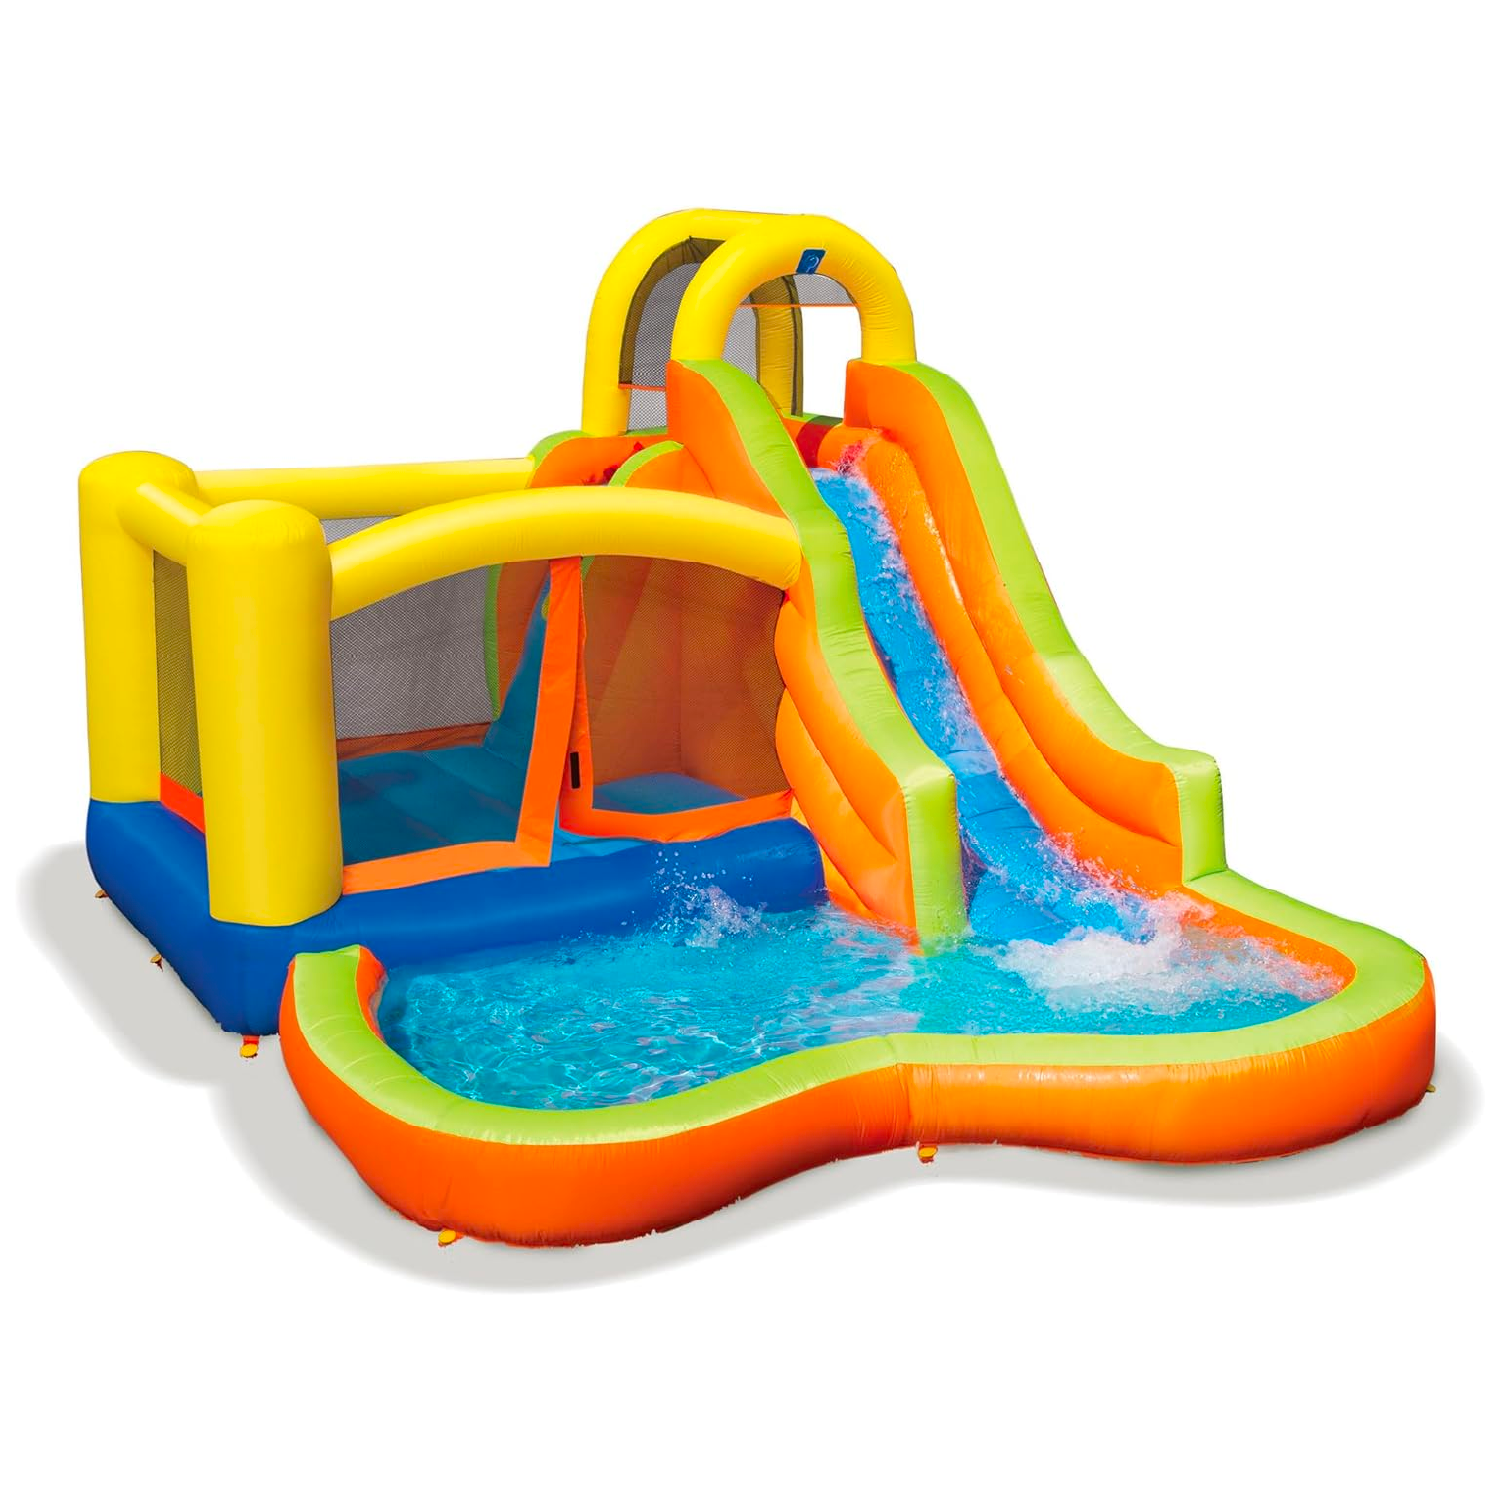 Banzai Sun 'N Splash Fun Kids Inflatable Bounce House and Water Slide Park - image 1 of 11